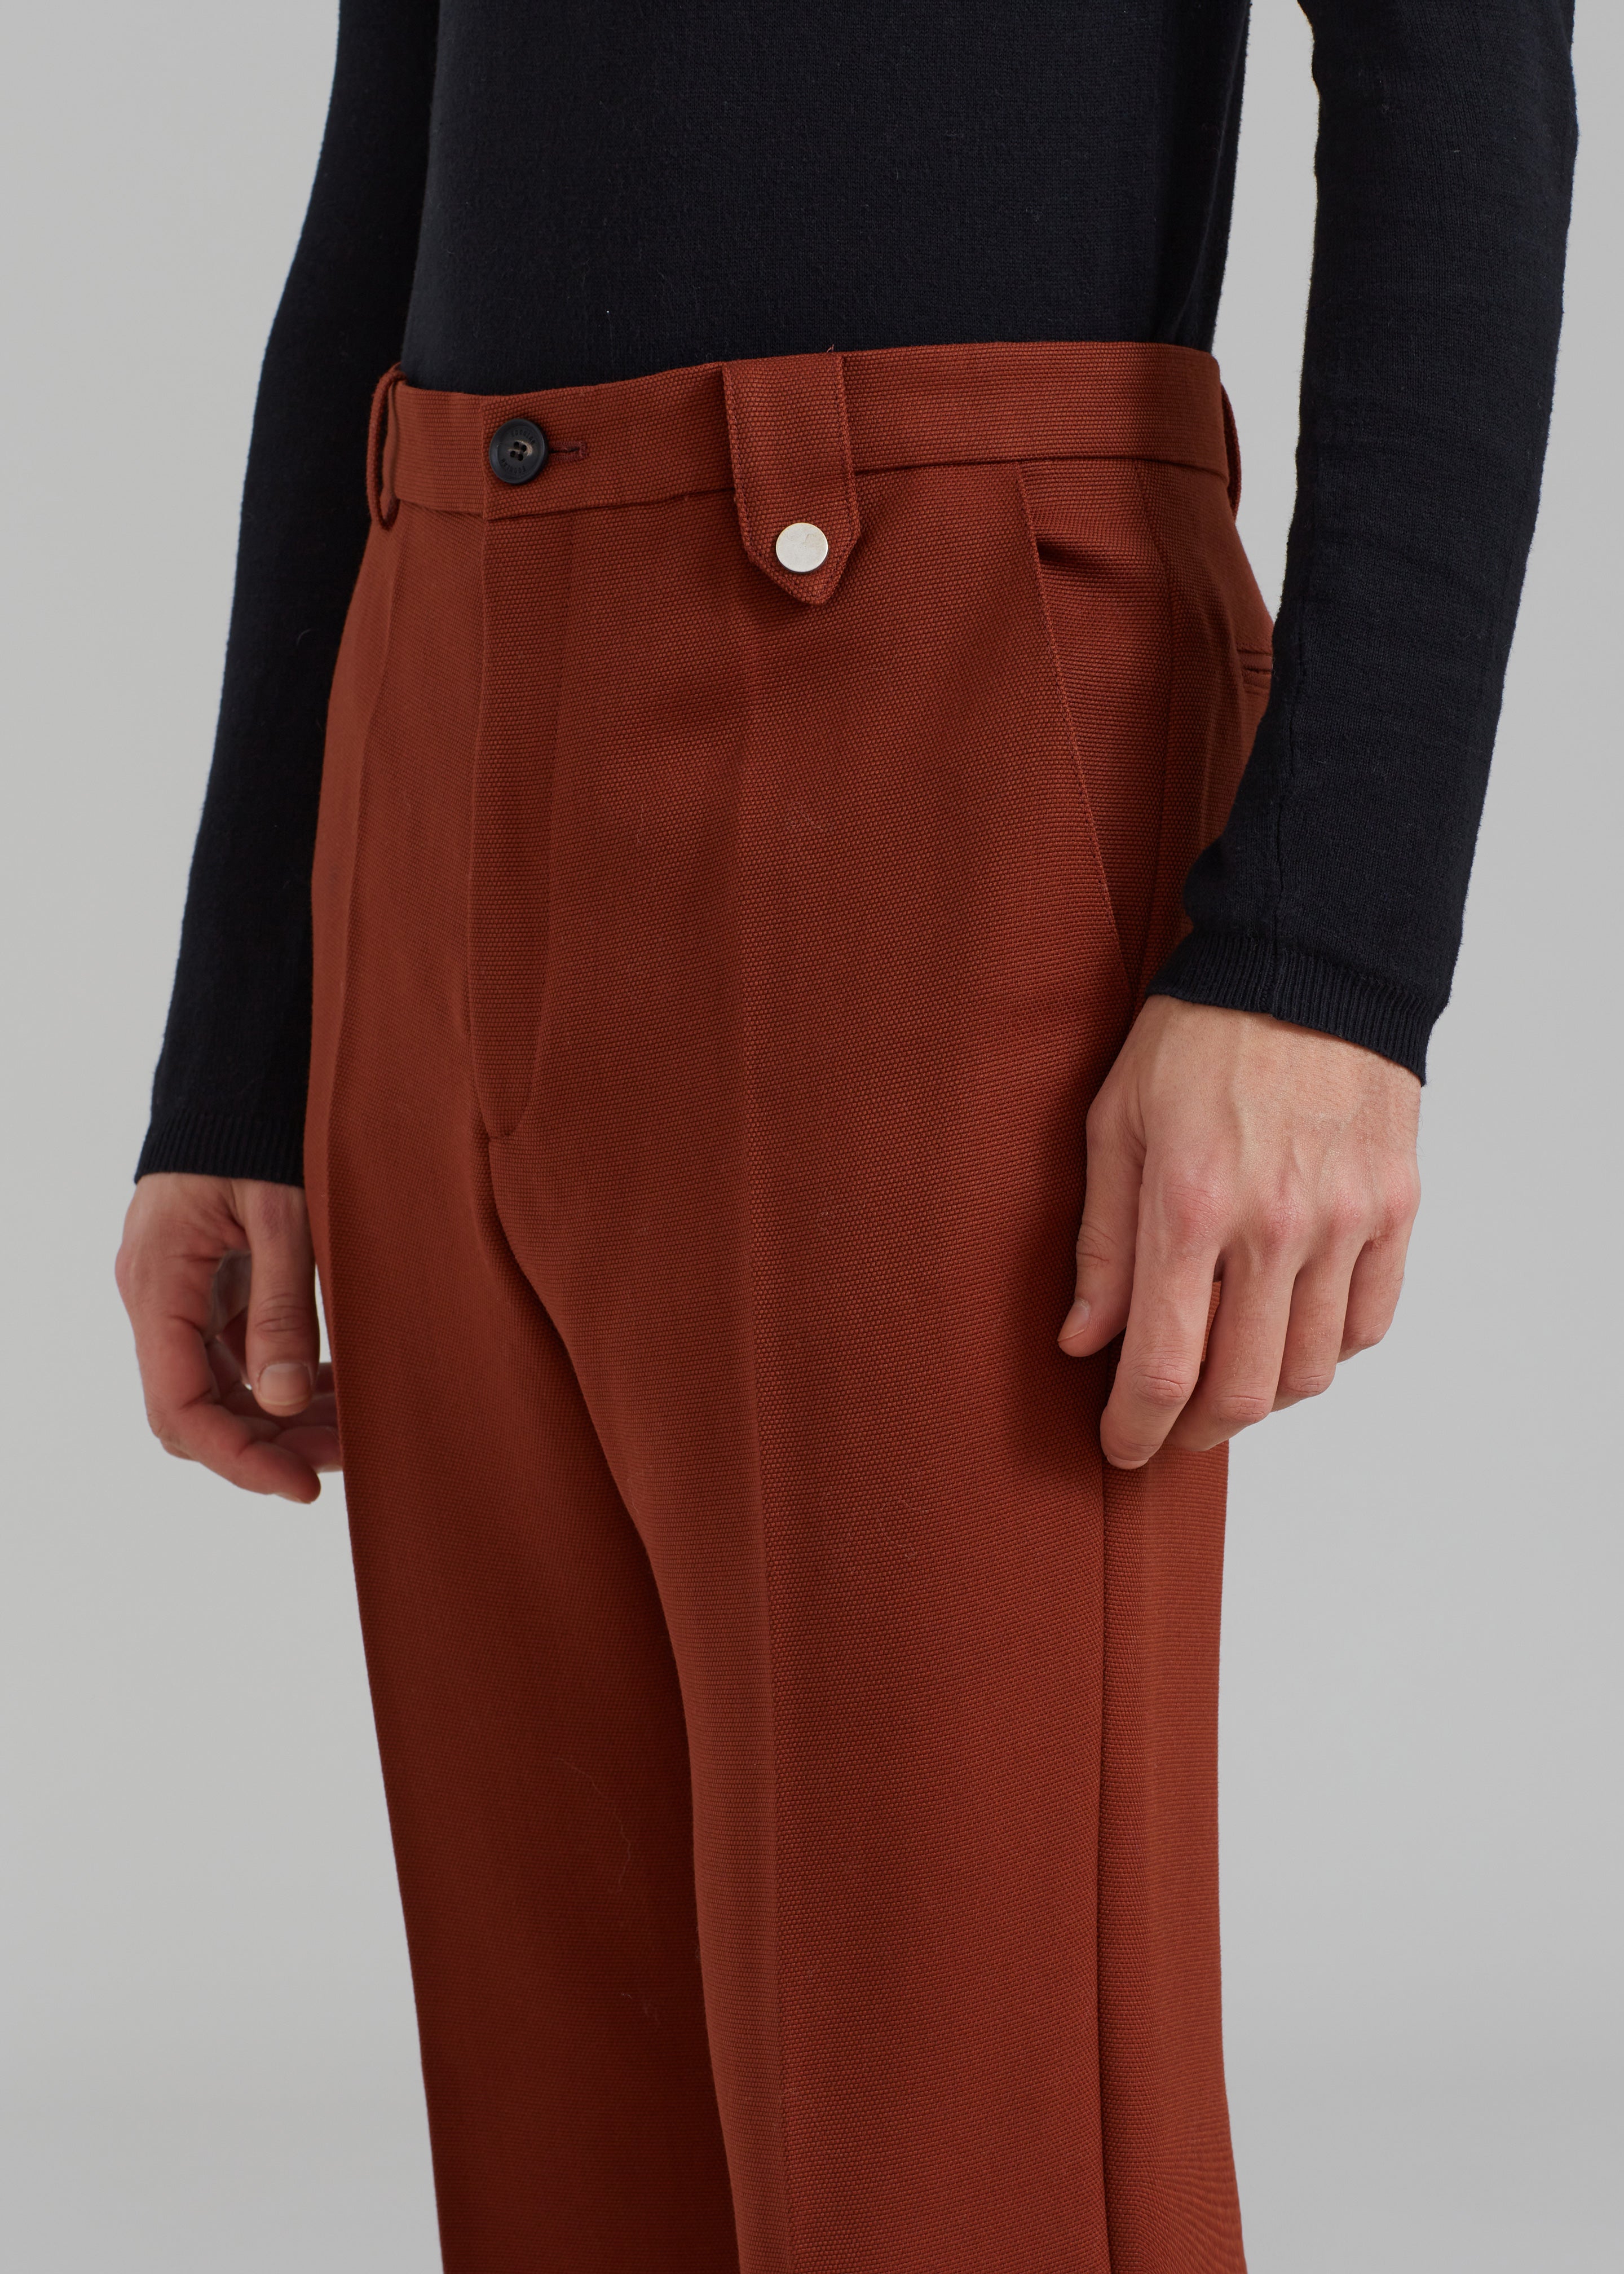 EGONLab Sami Tailored Trousers - Rust Wool - 11